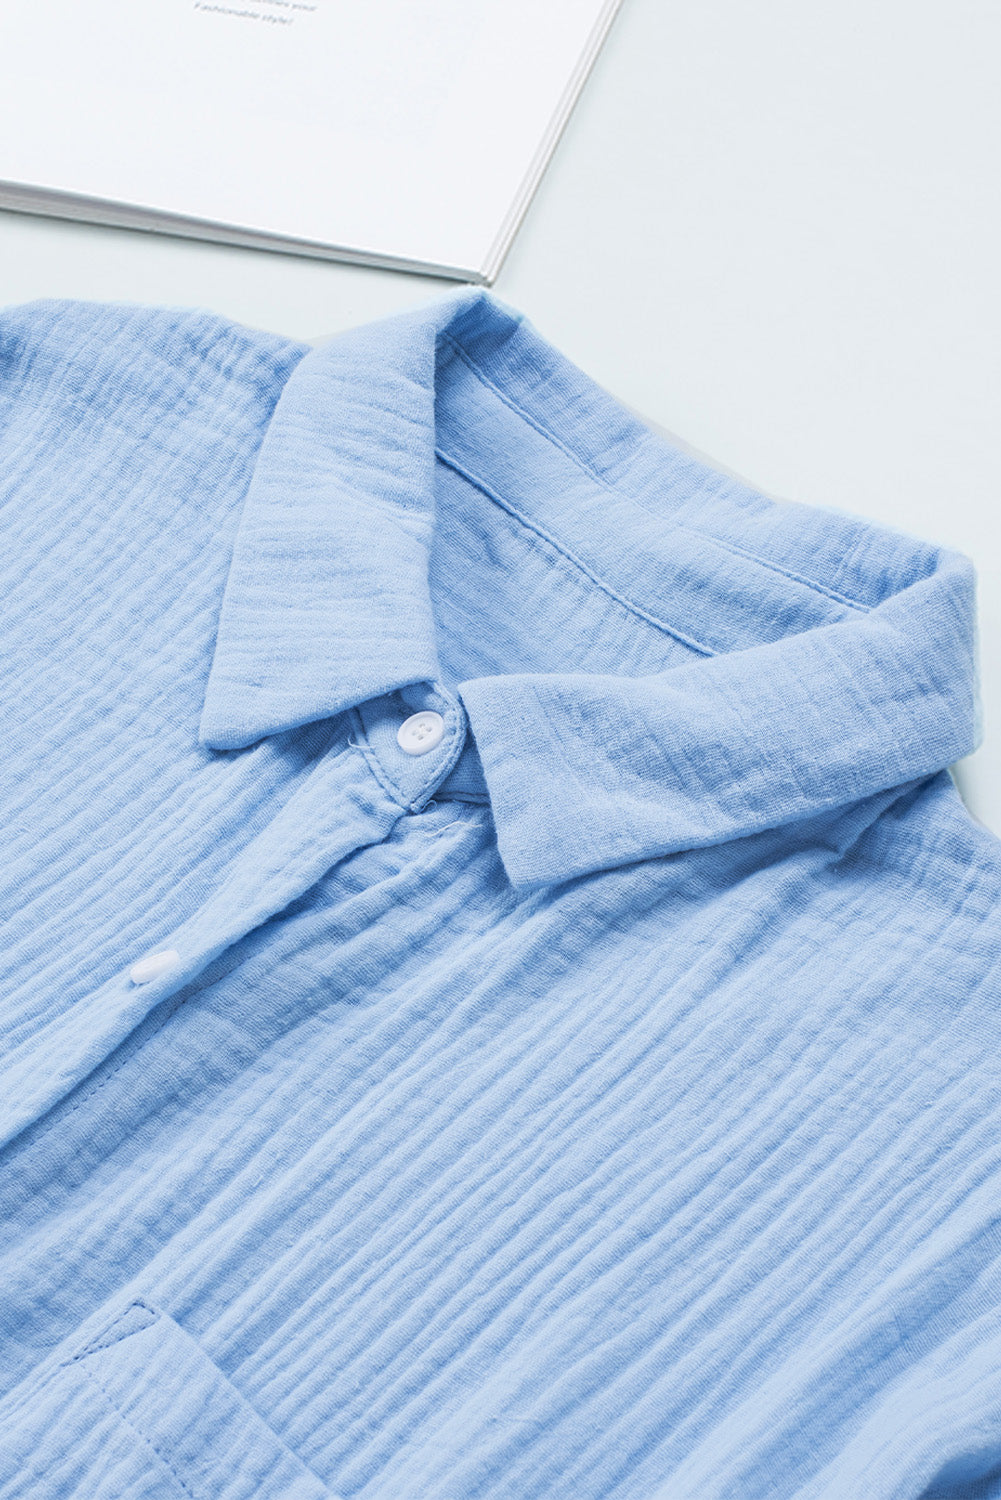 Cotton Textured Pocketed Button Up Shirt